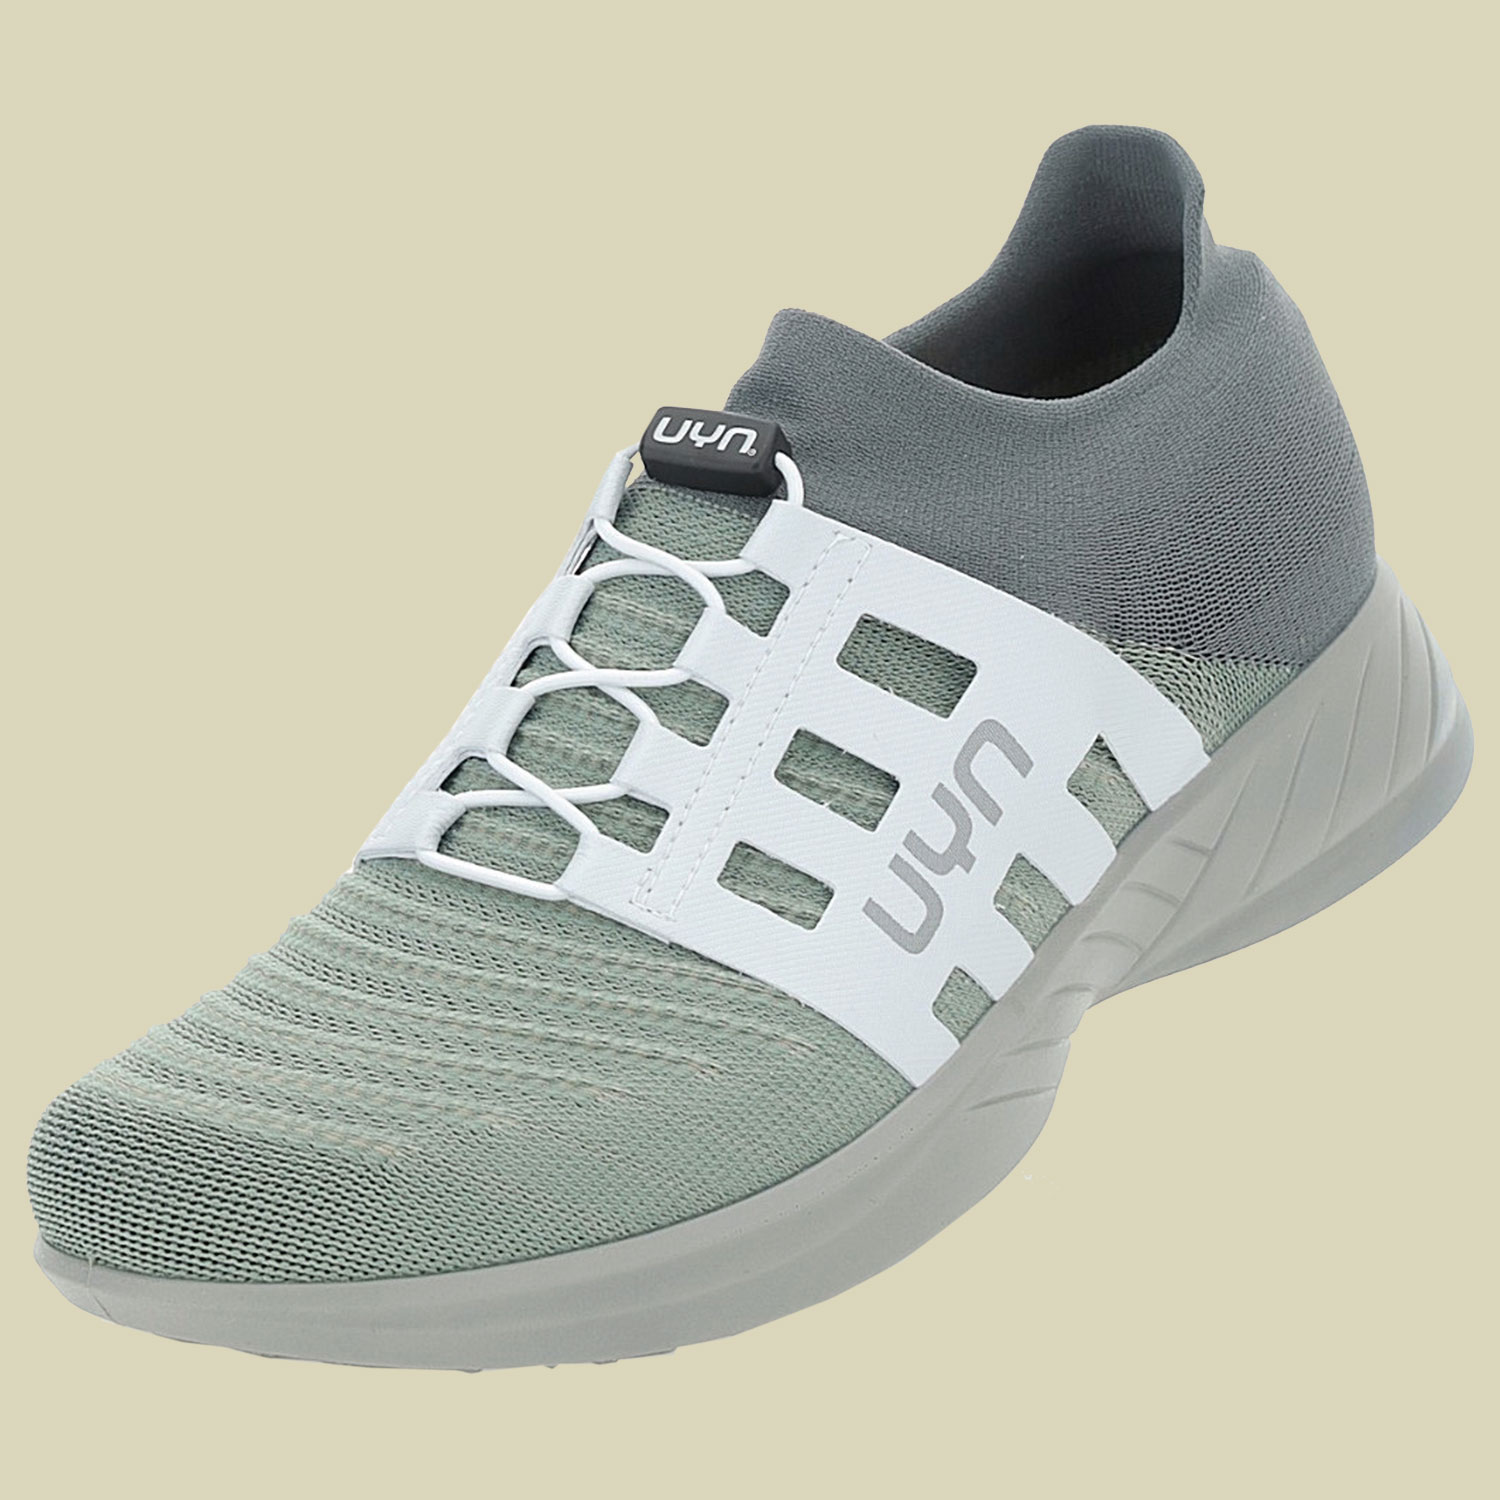 Ecolypt Tune Shoes Grey Sole Men Größe 44 Farbe sage green